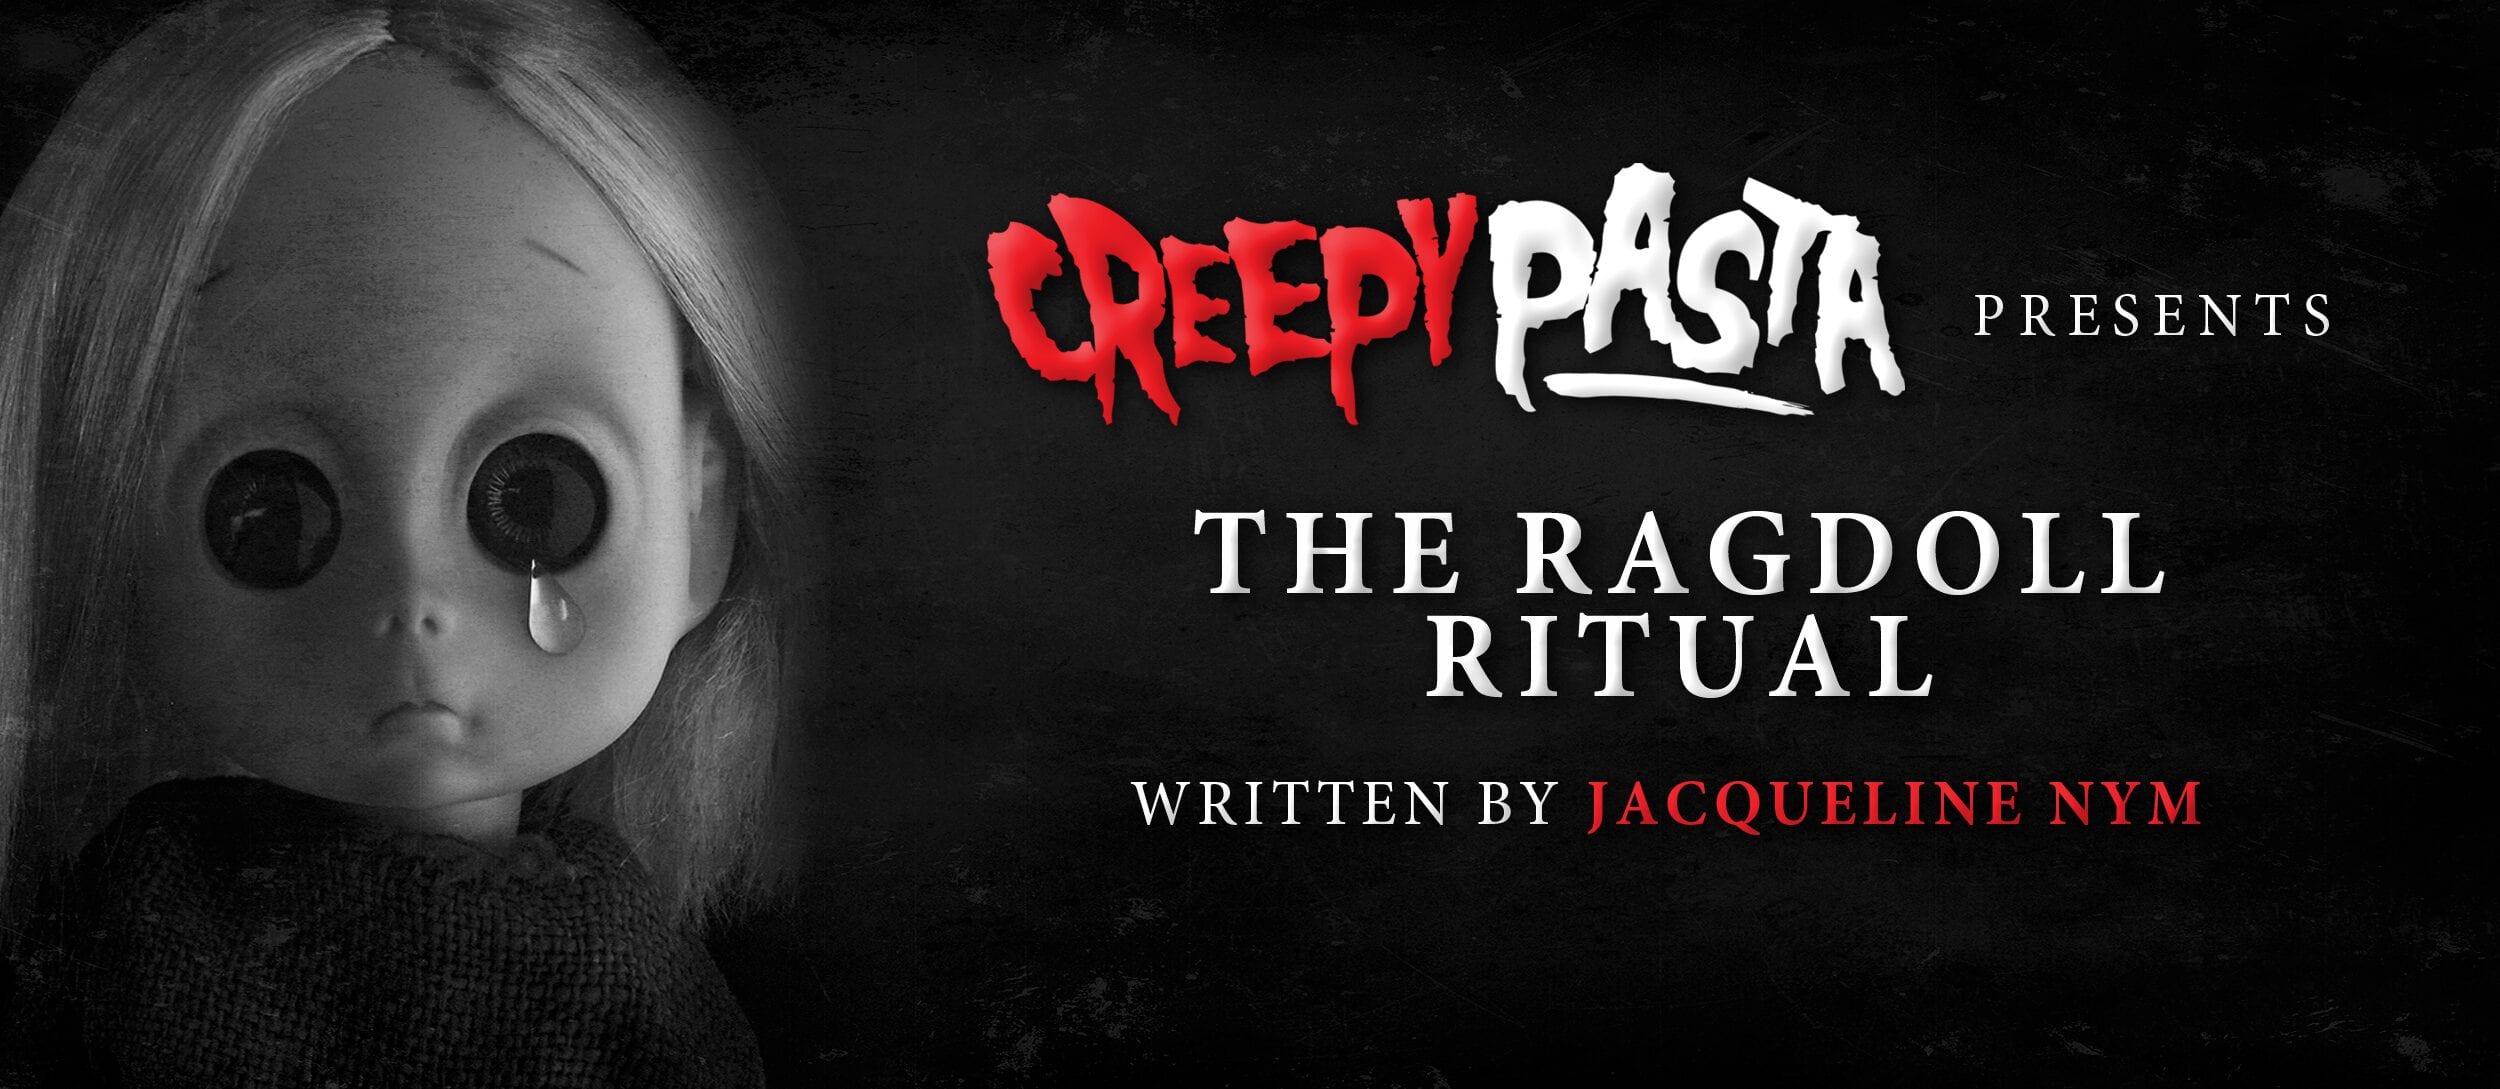 The Ragdoll Ritual Creepypasta - jeff the killer vote halloween face roblox halloween meme